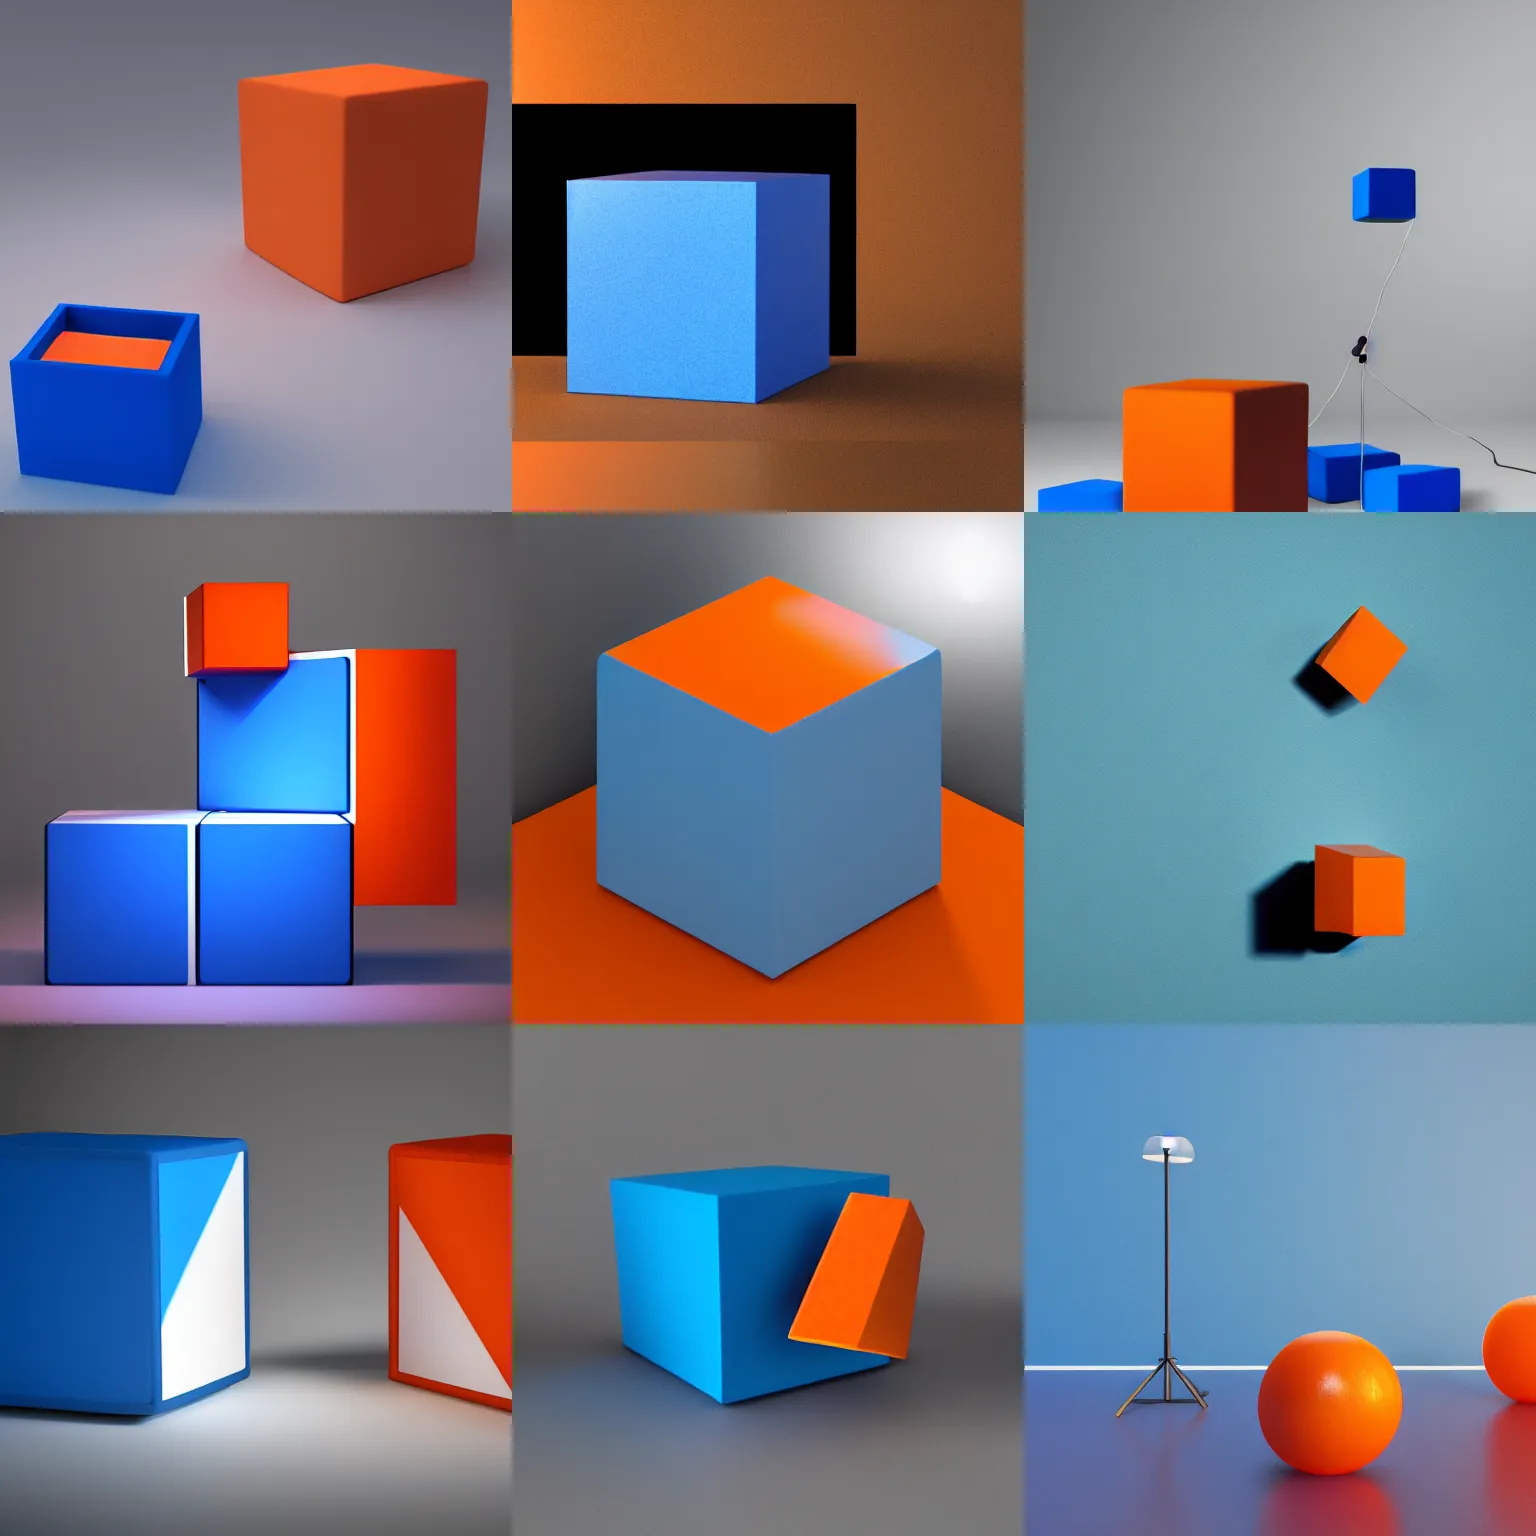 Prompt: one blue cube and one orange cube, 3 3 8 8, studio light, studio photo, 1 5 9 7, octane render